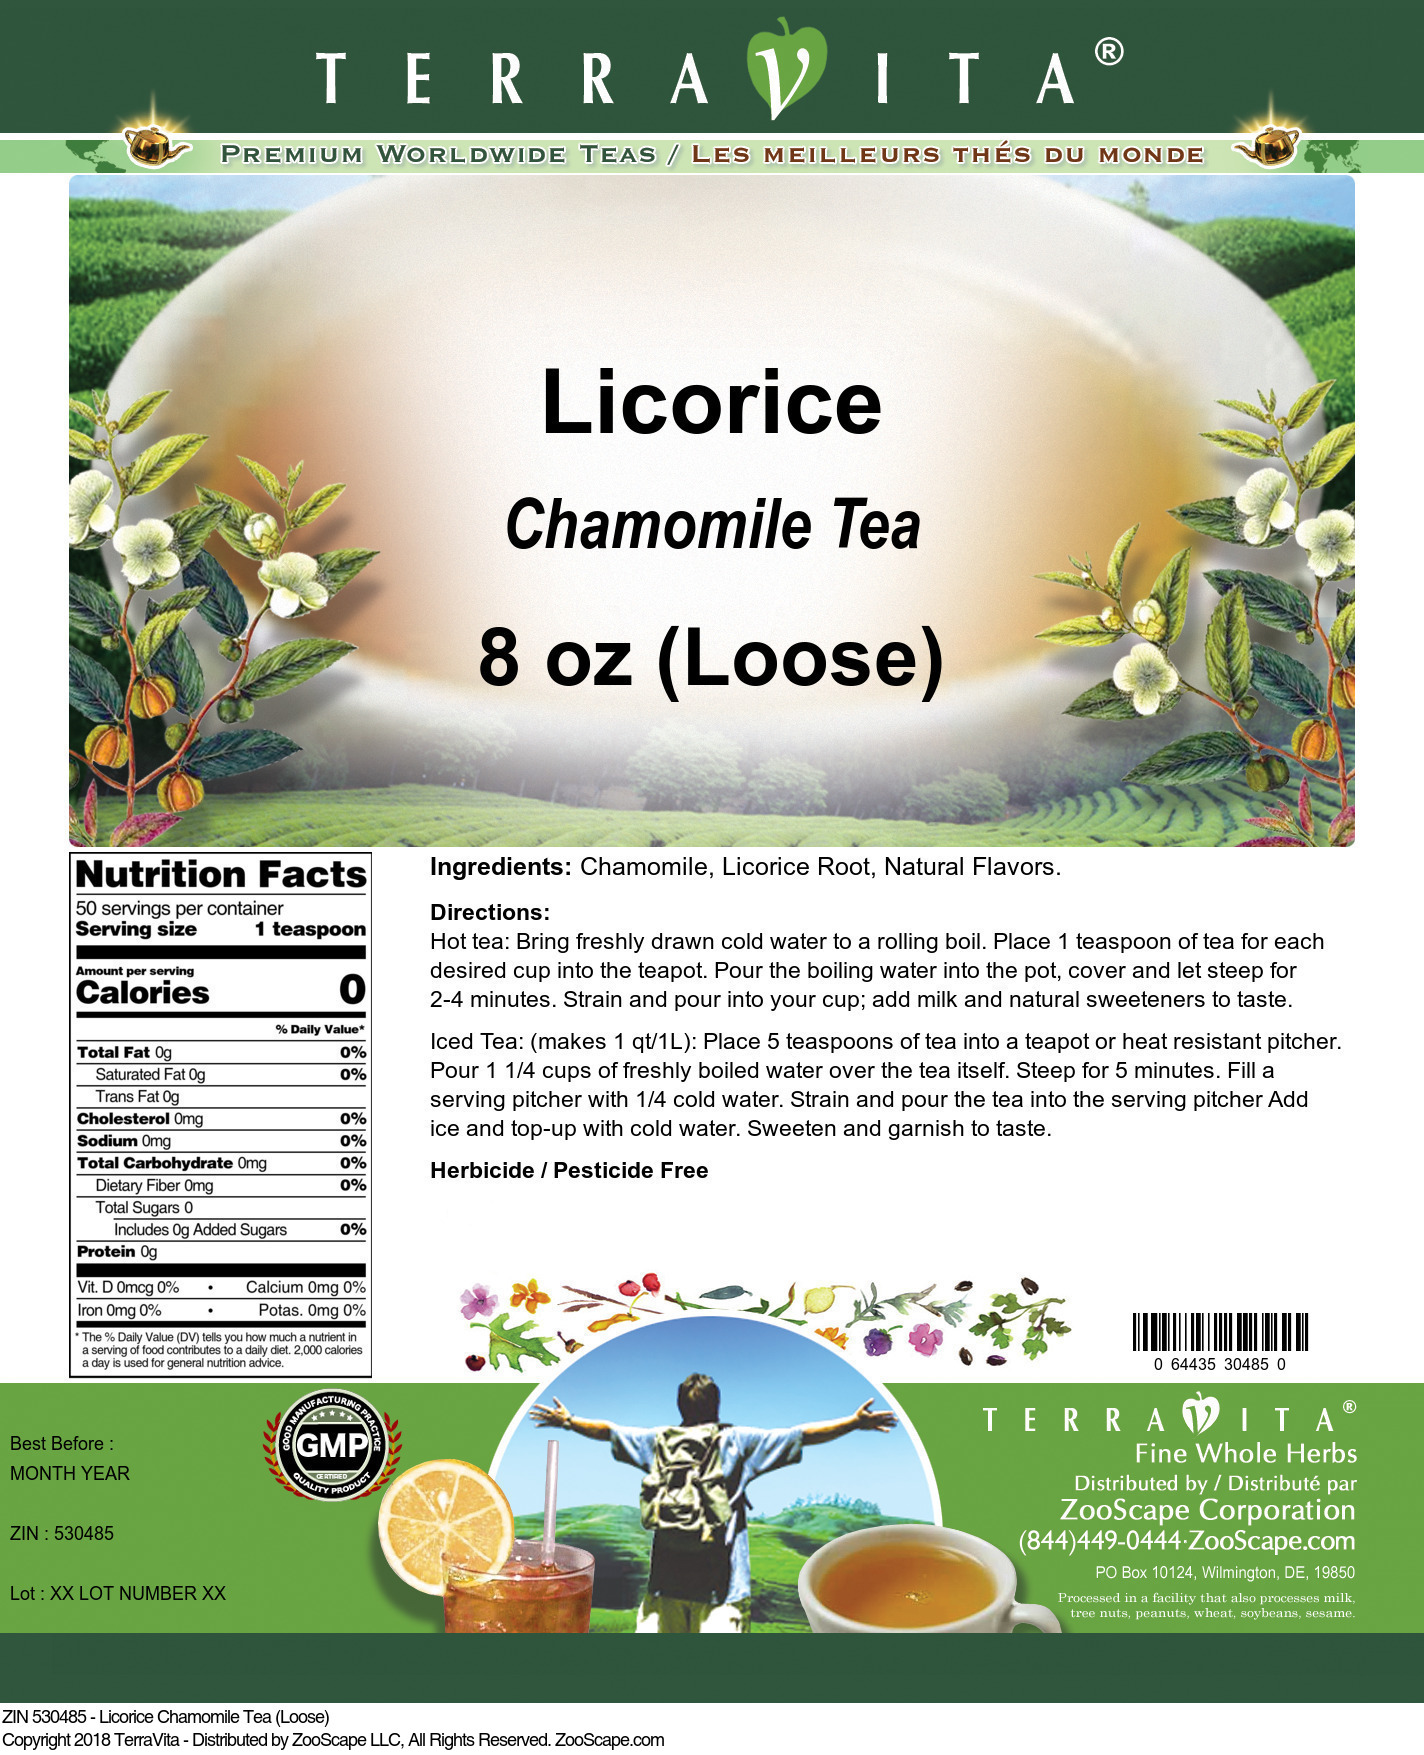 Licorice Chamomile Tea (Loose) - Label